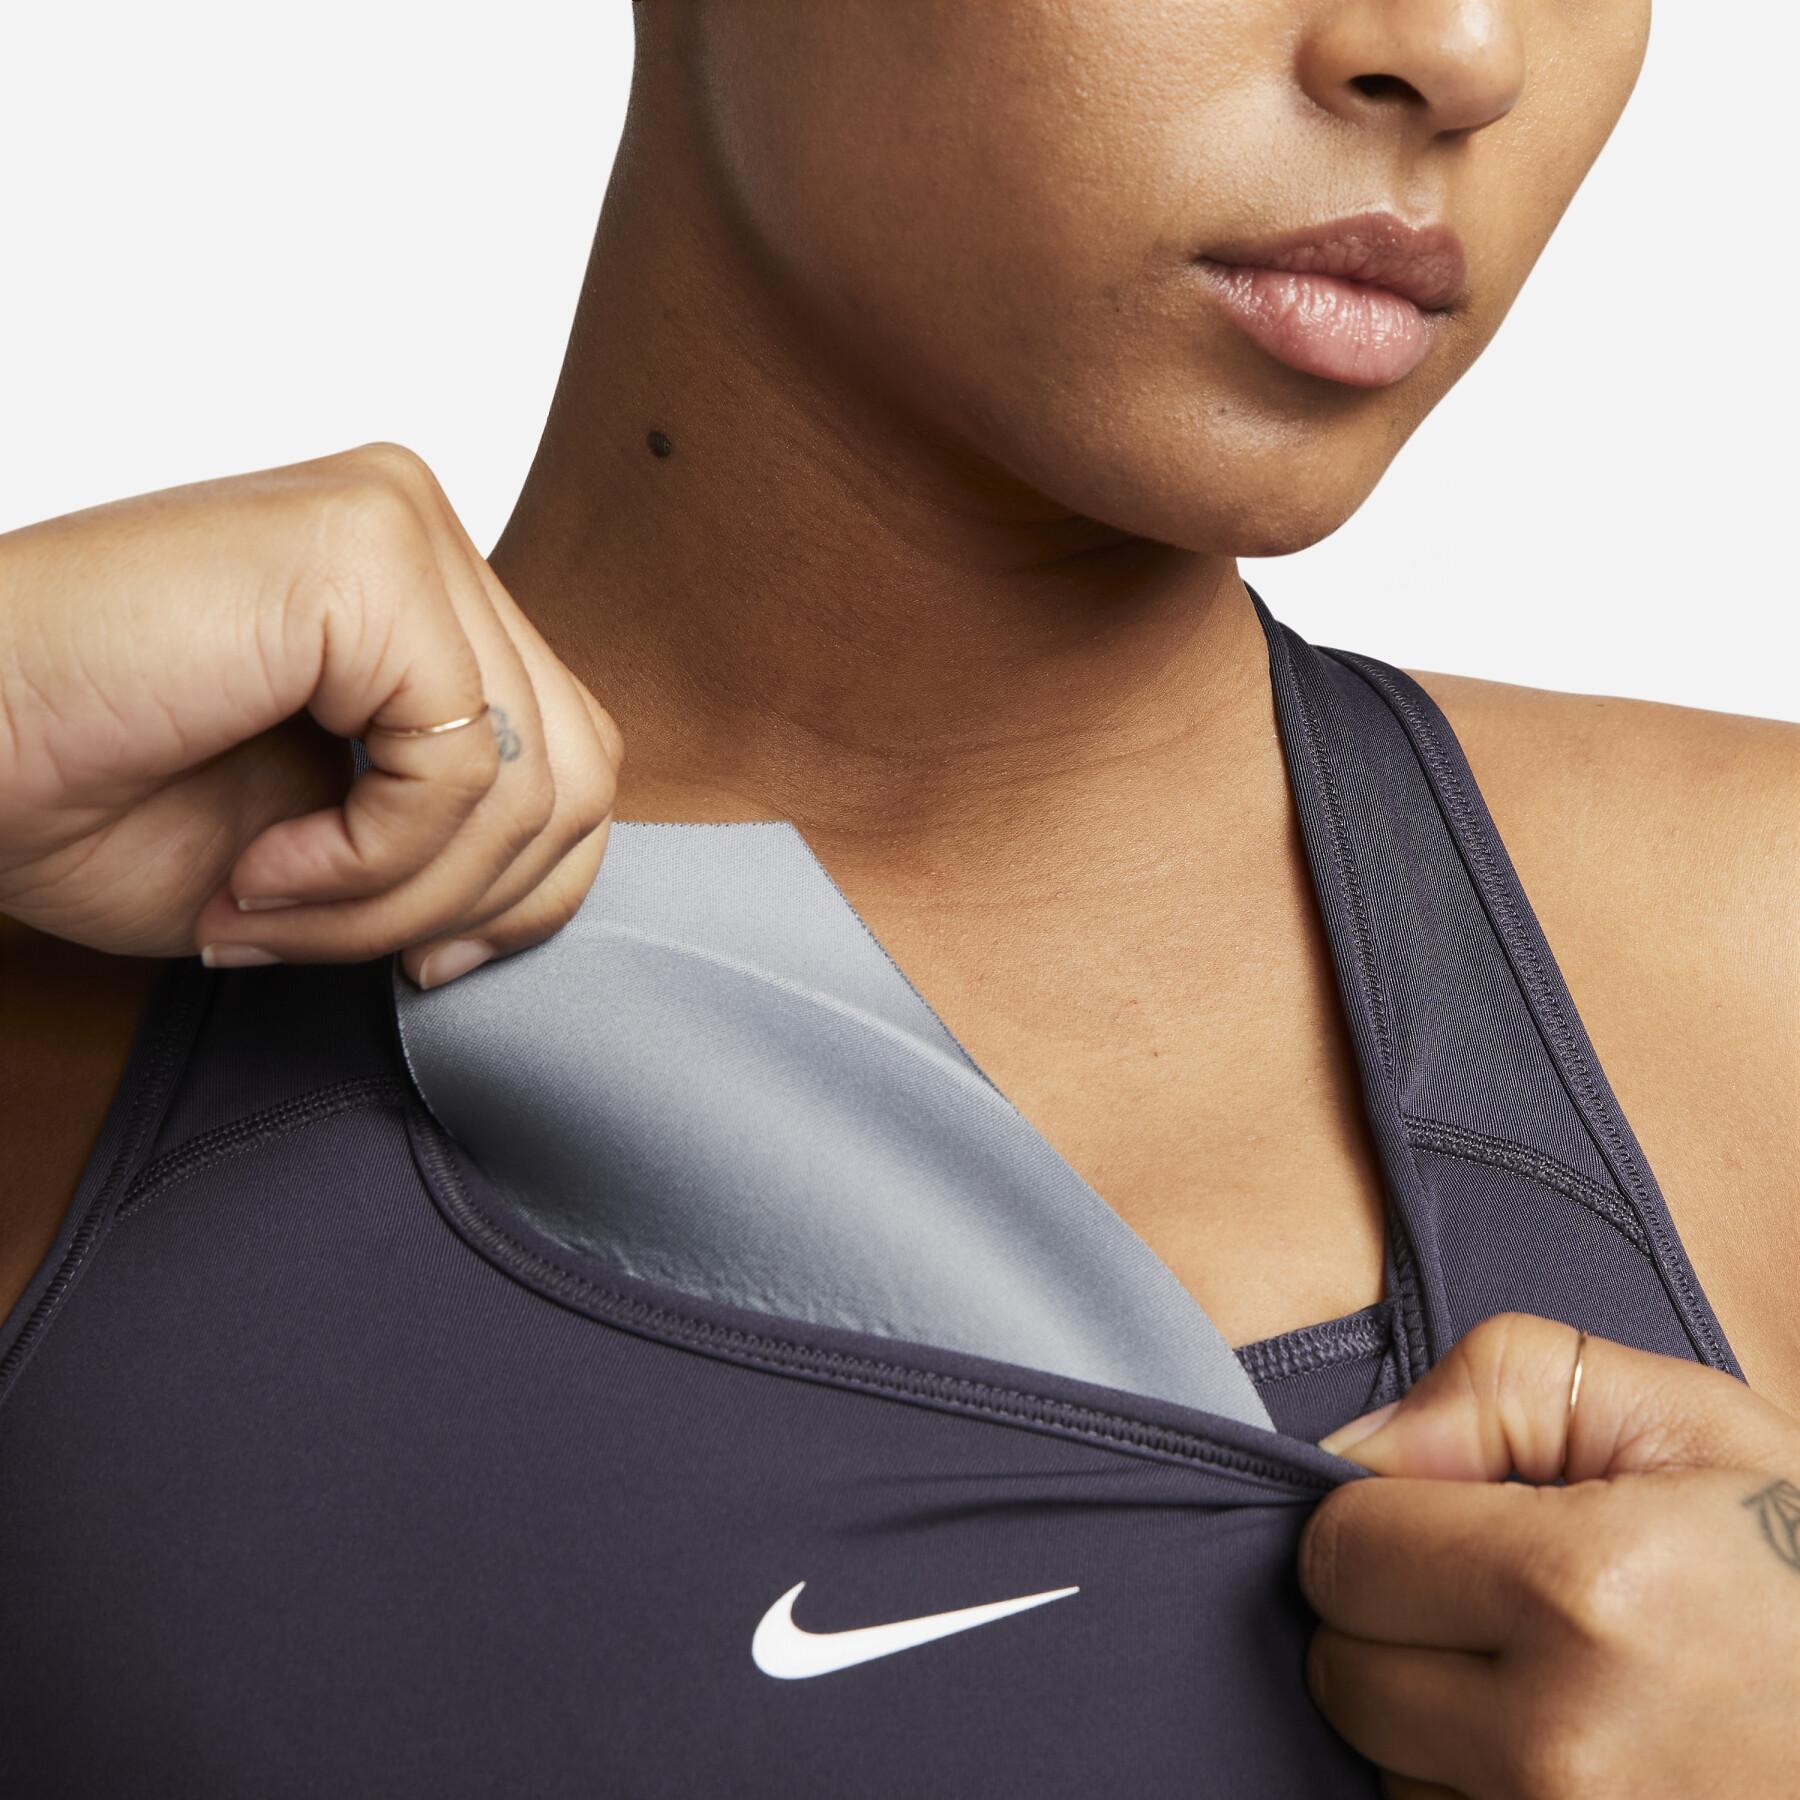 Women's bra Nike Swoosh